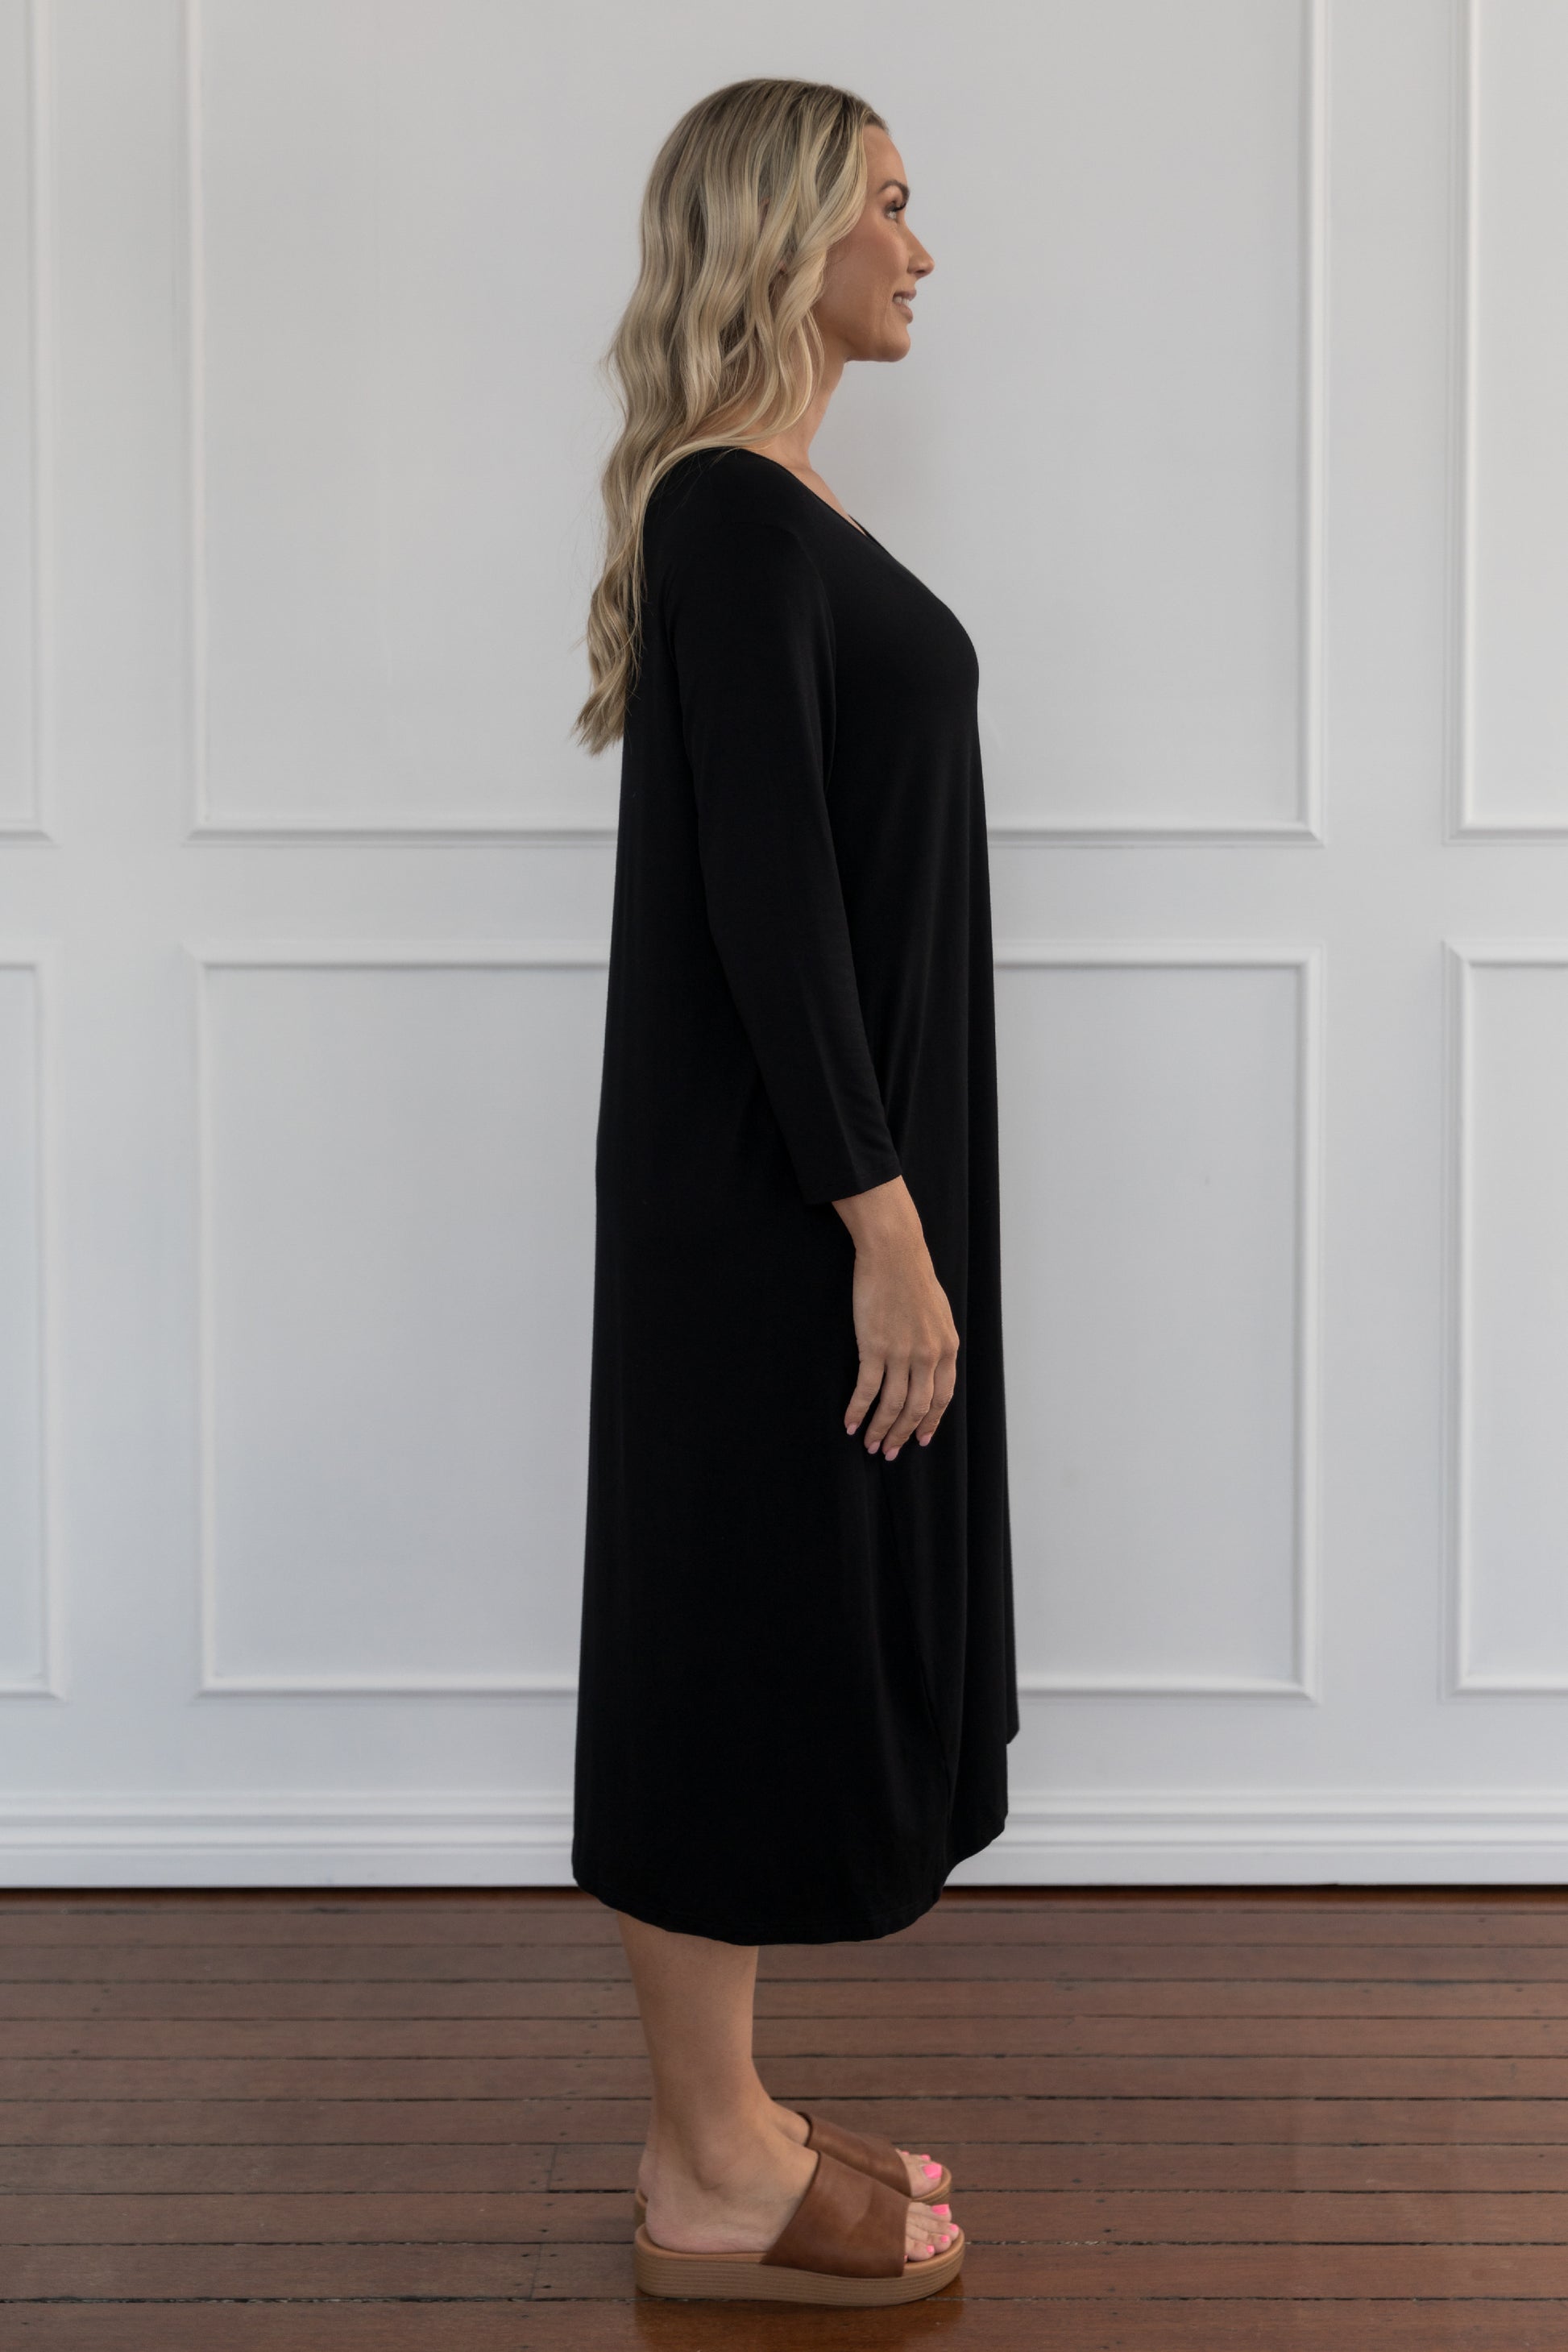 Plus-Sized Black Dresses | PQ Collection | Long Sleeve T-Shirt Dress